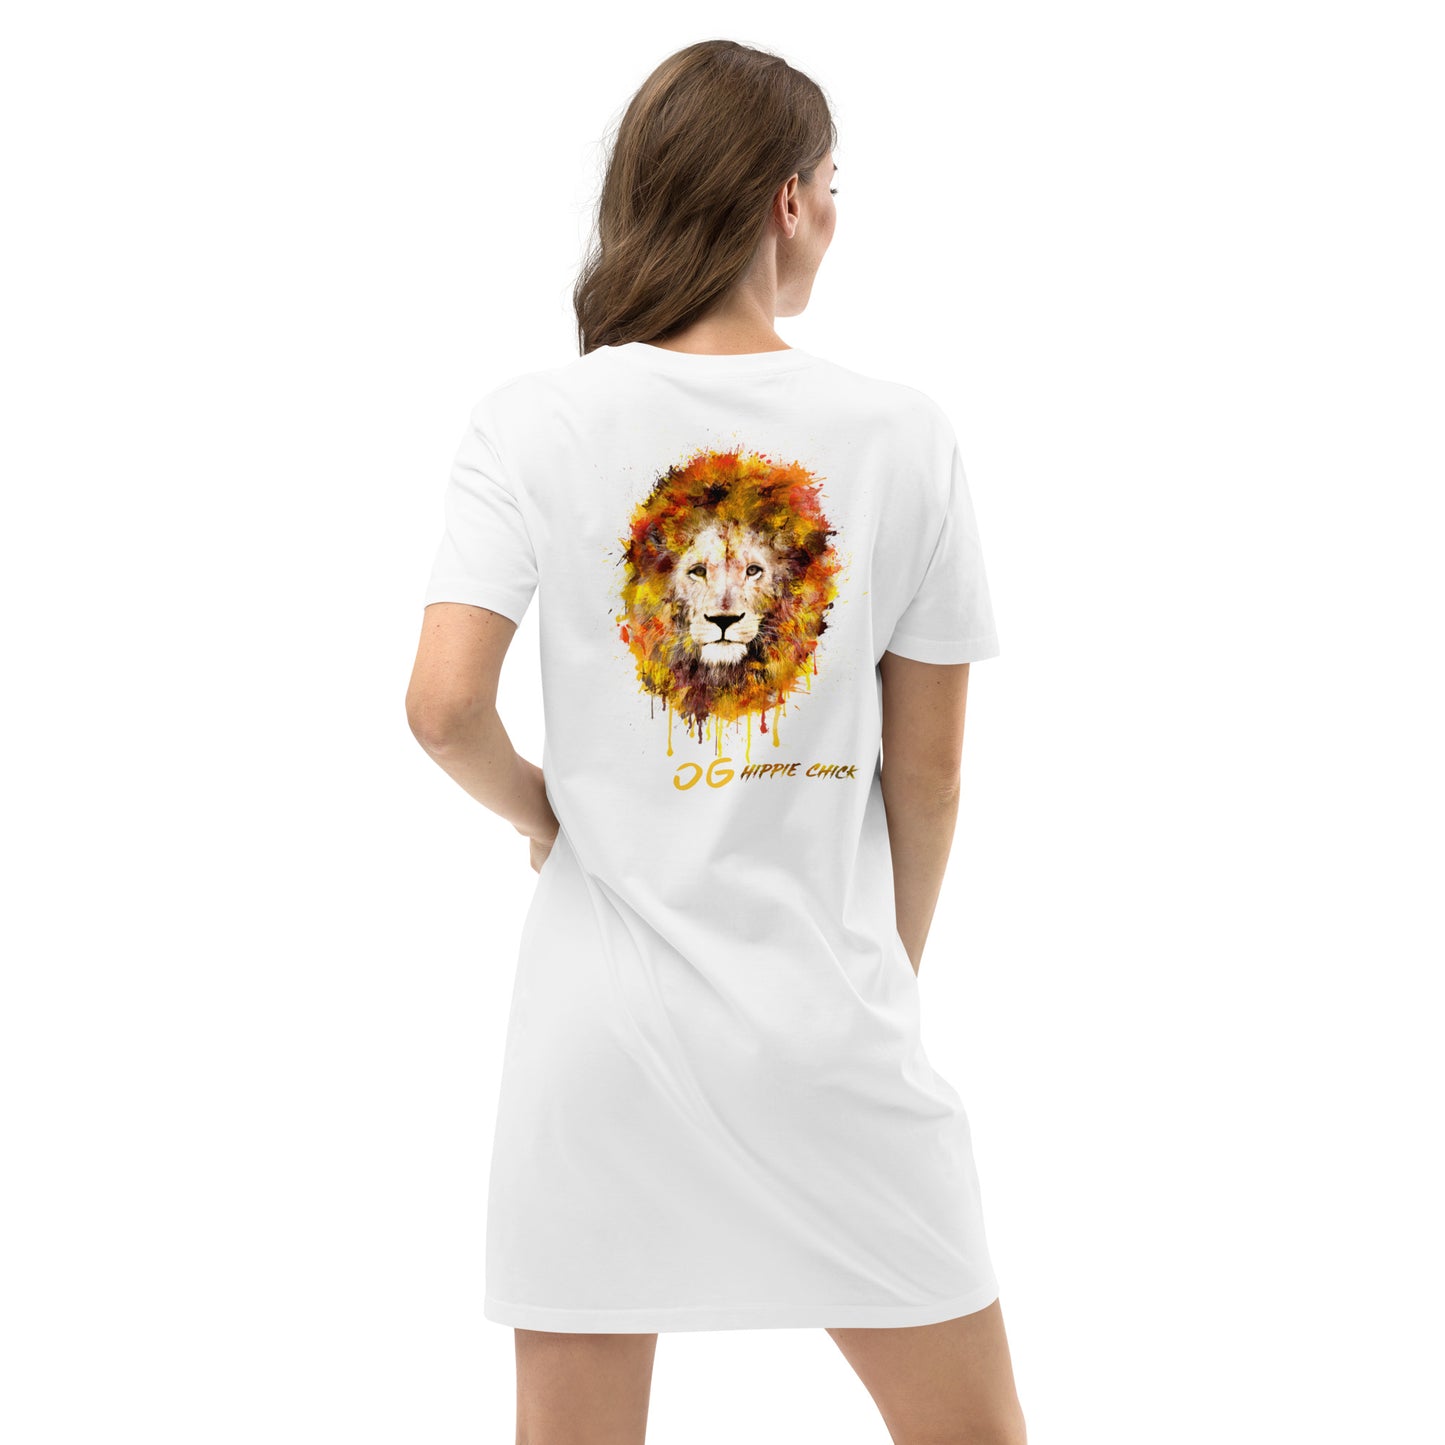 T-shirt Dress (Lion back)